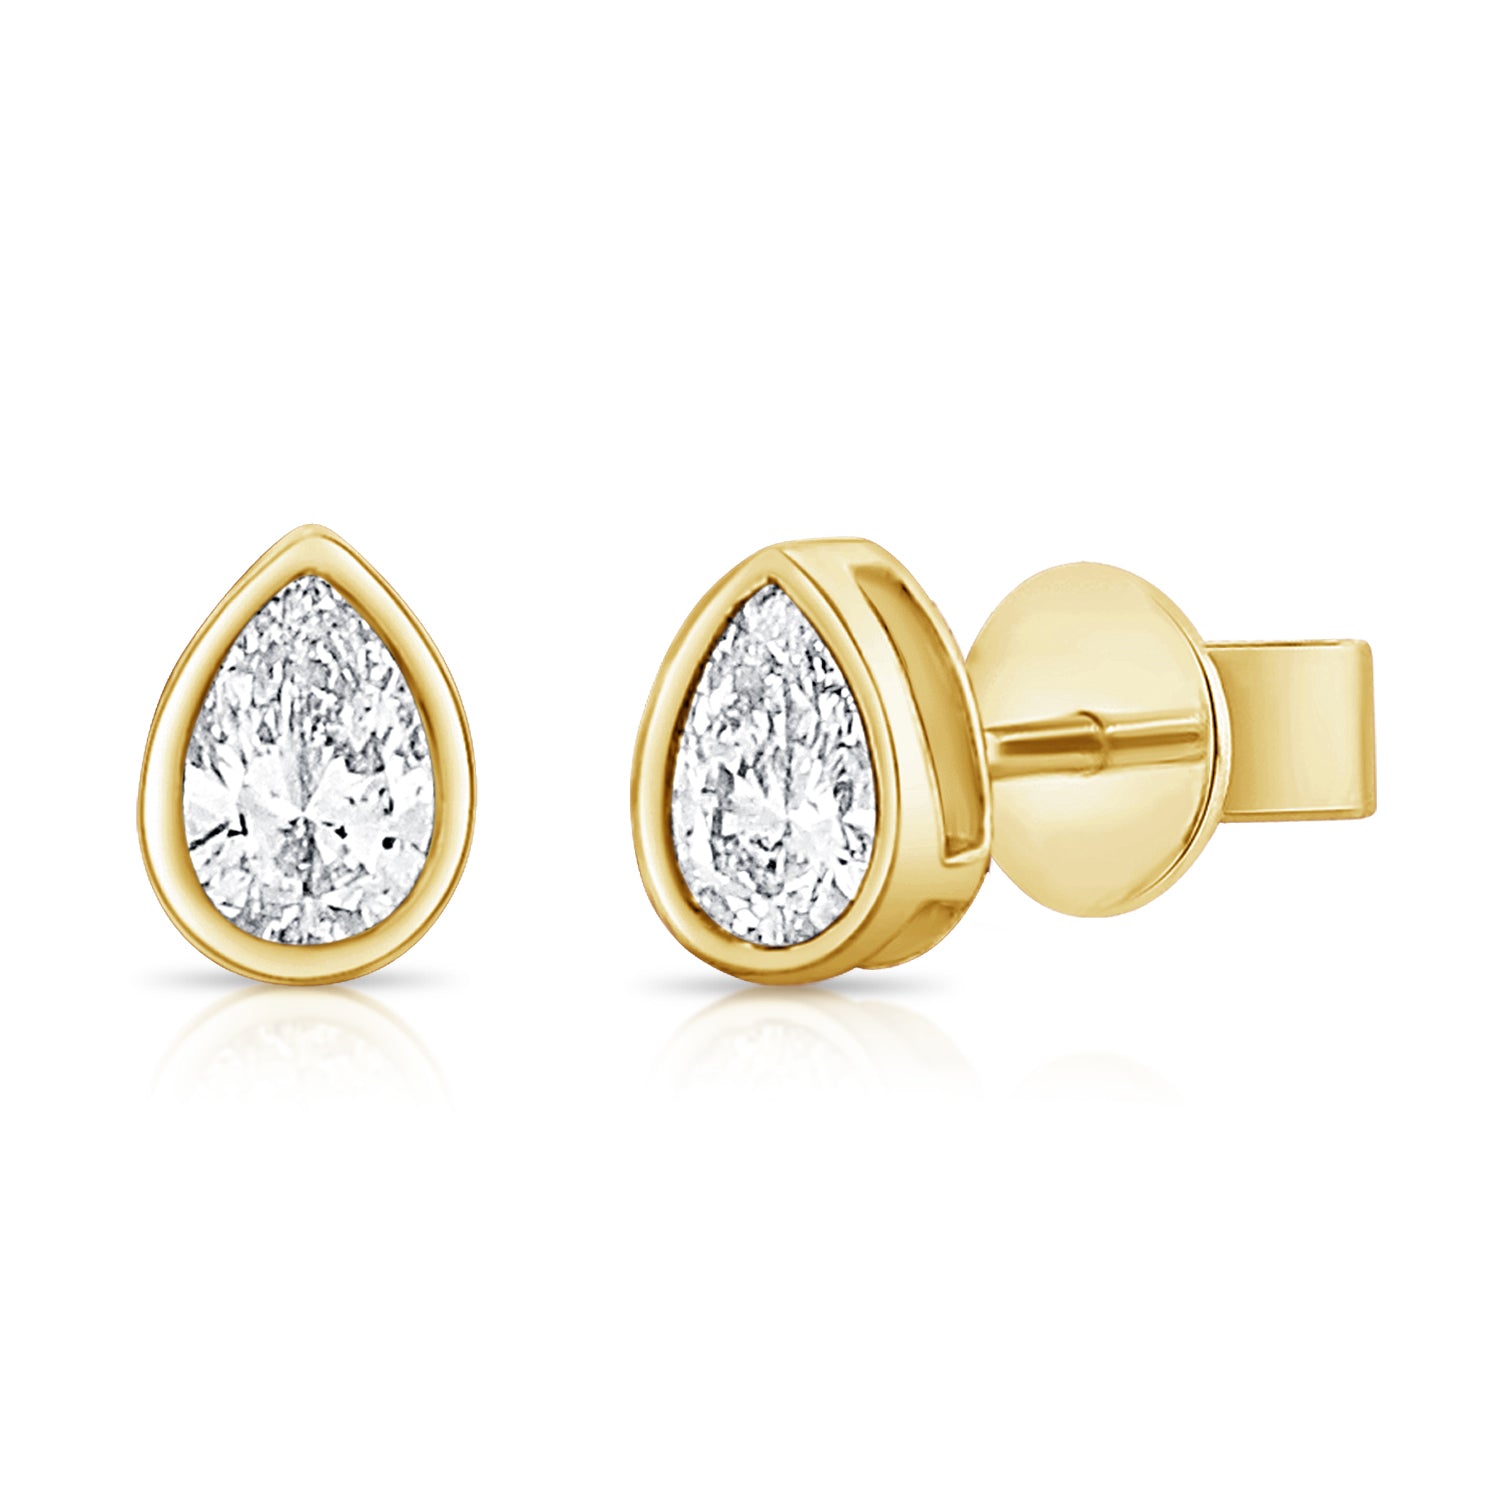 Unique Asian Earring Gift | Fire - Golden Ear Stud - 925 Sliver Earrings -  Sterling Silver - Designer Jewelry